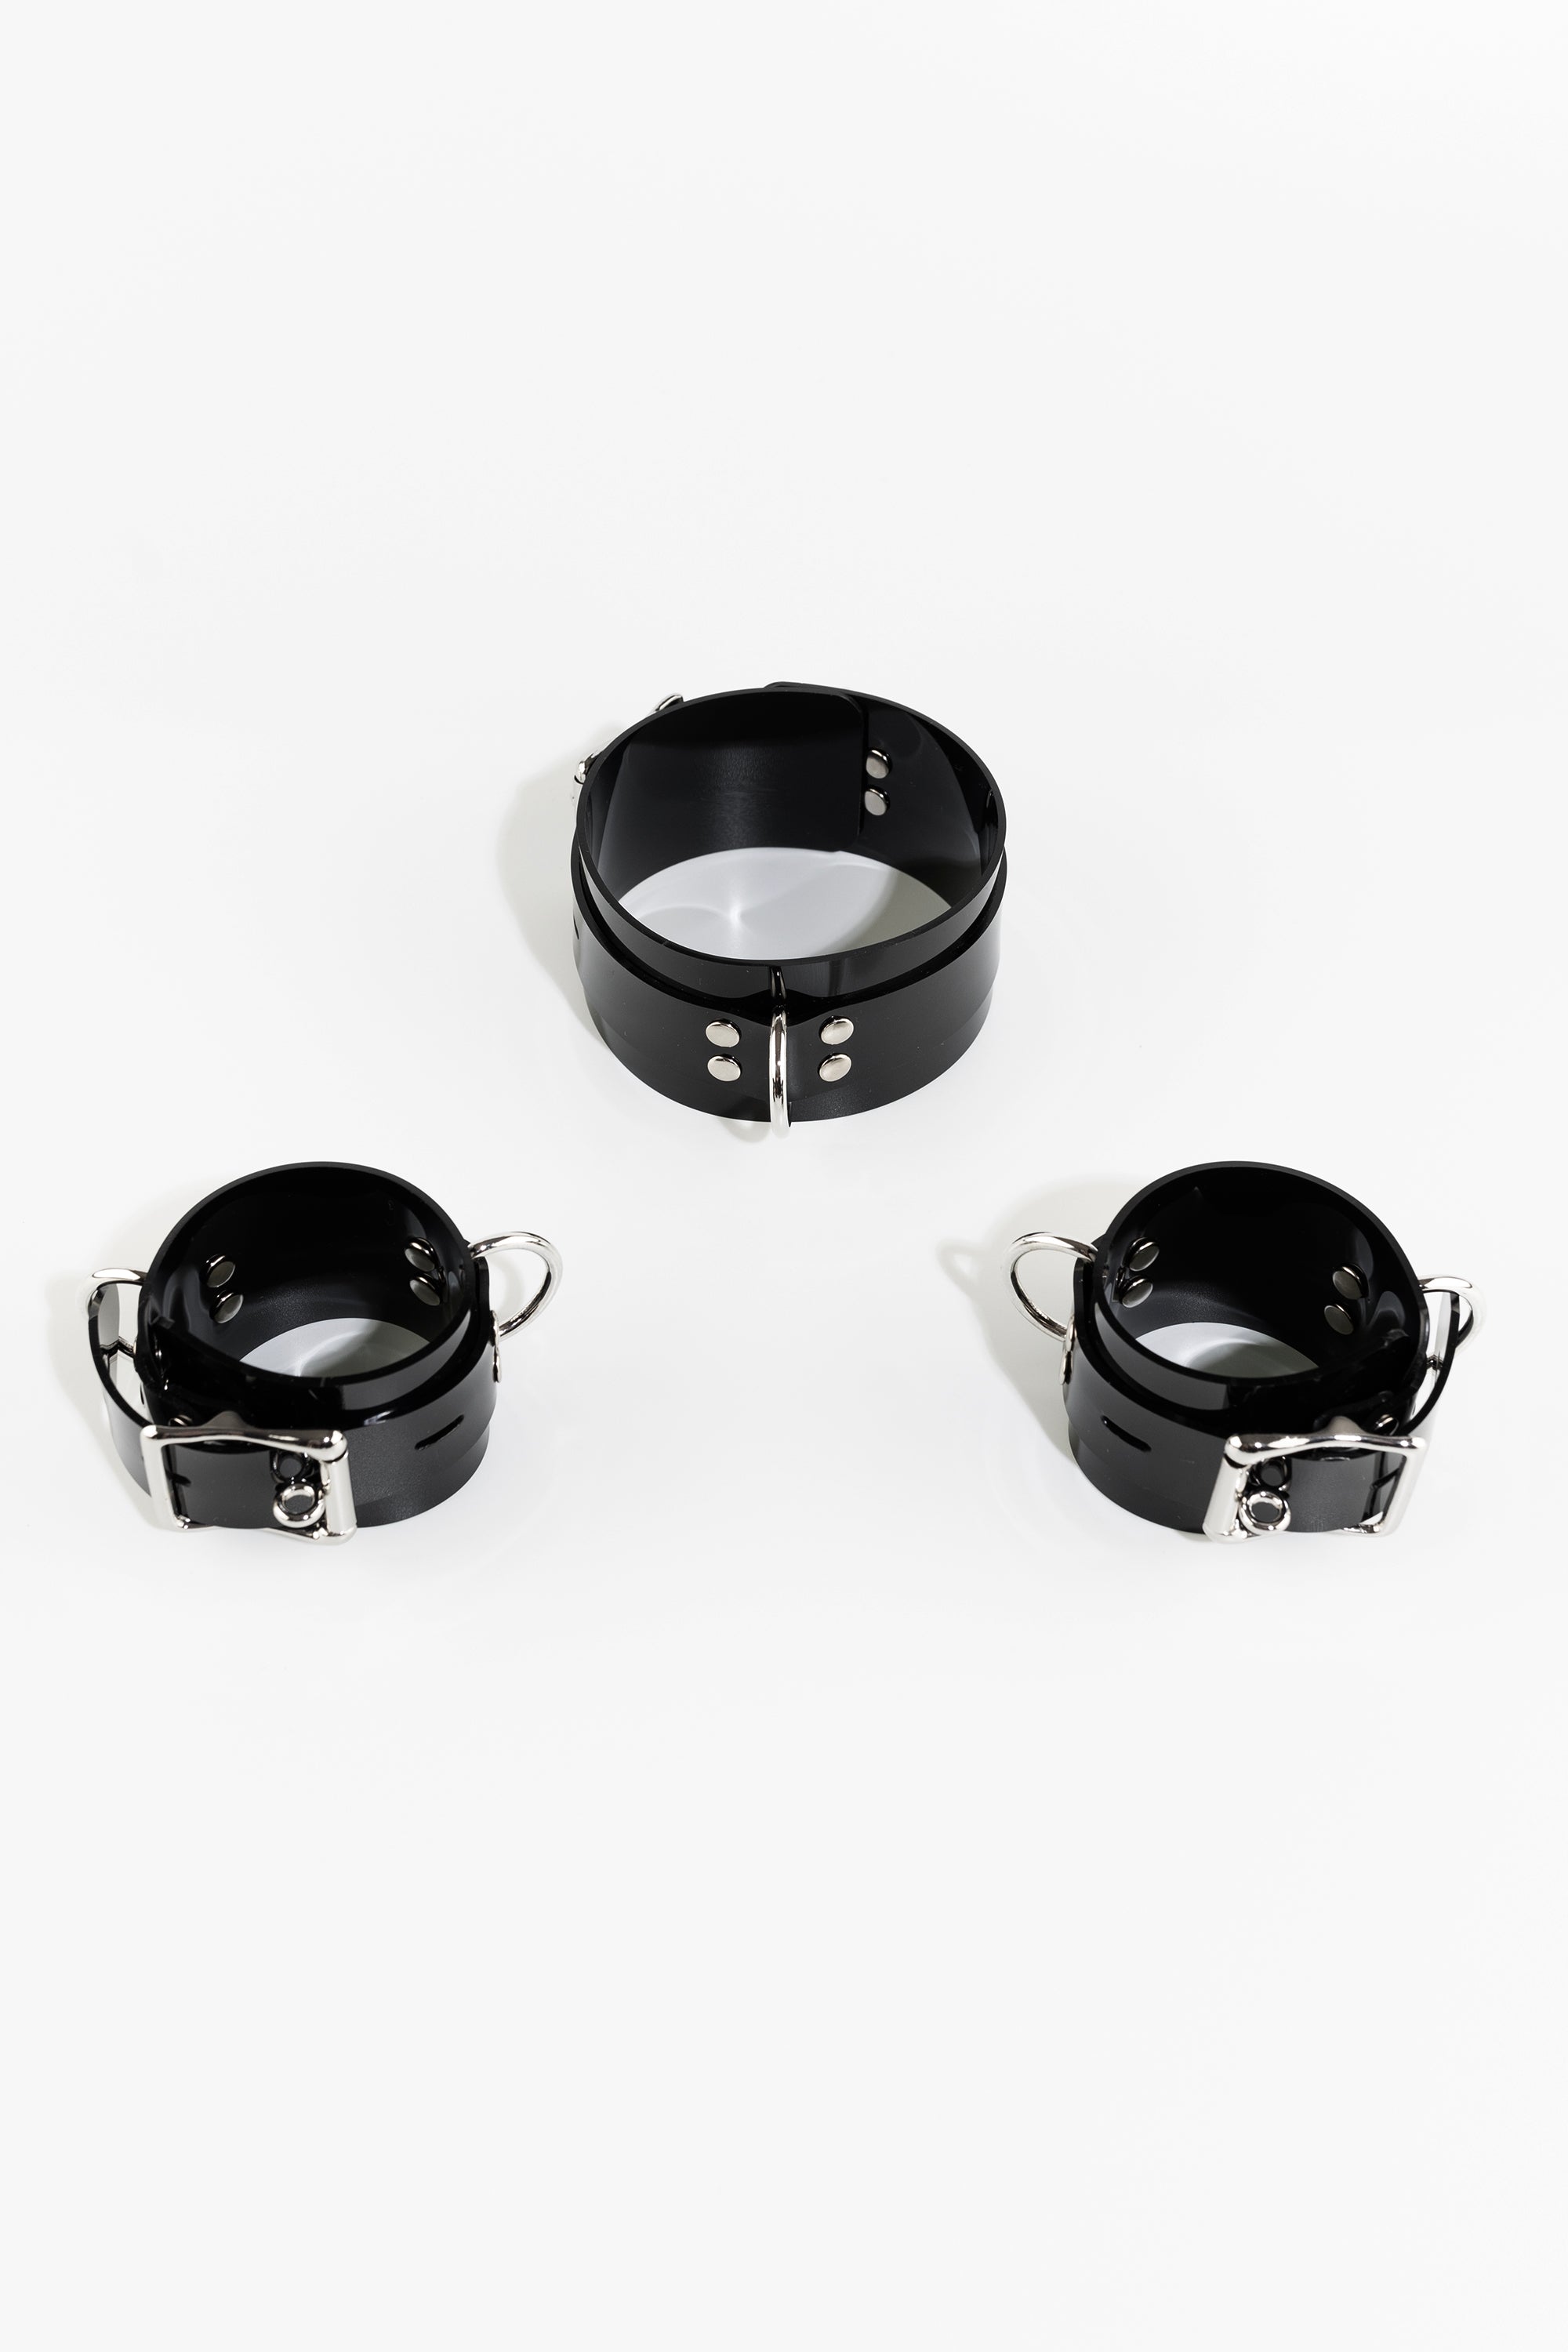 Lockable collar and wrist cuffs set, black/chrome